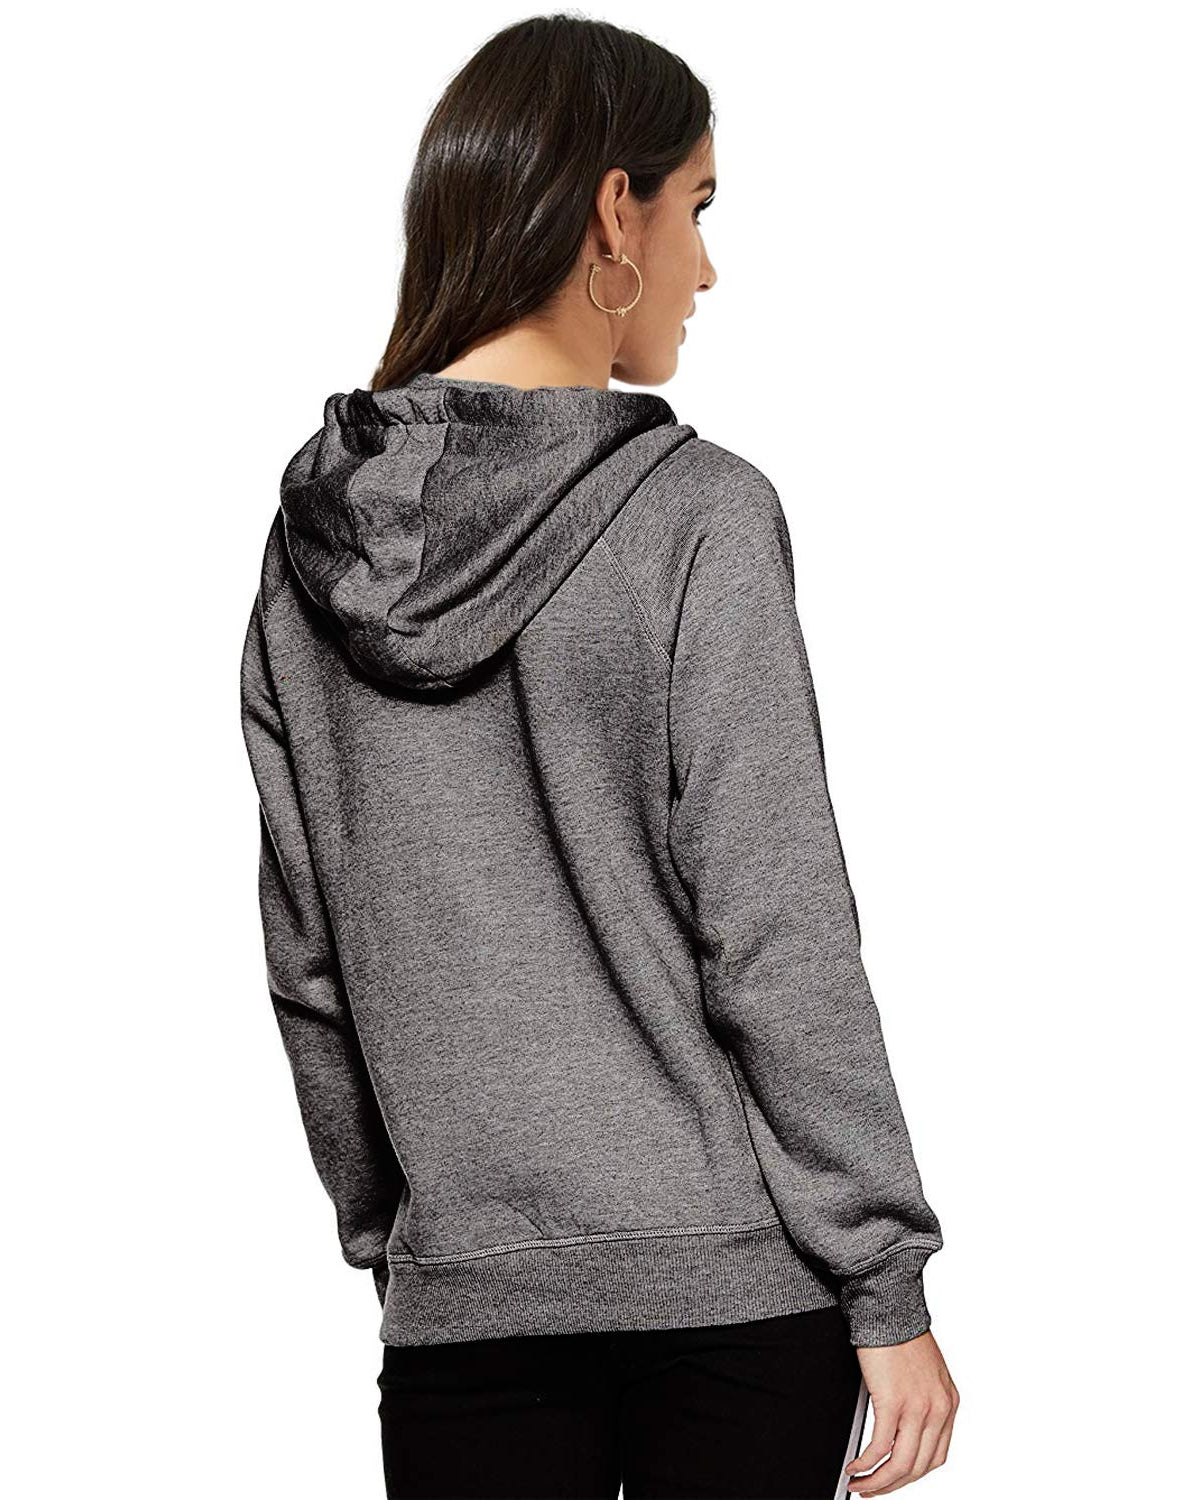 Prokick Women's Cotton Sporty Sweatshirt/Hoodie - Dark Grey - Best Price online Prokicksports.com